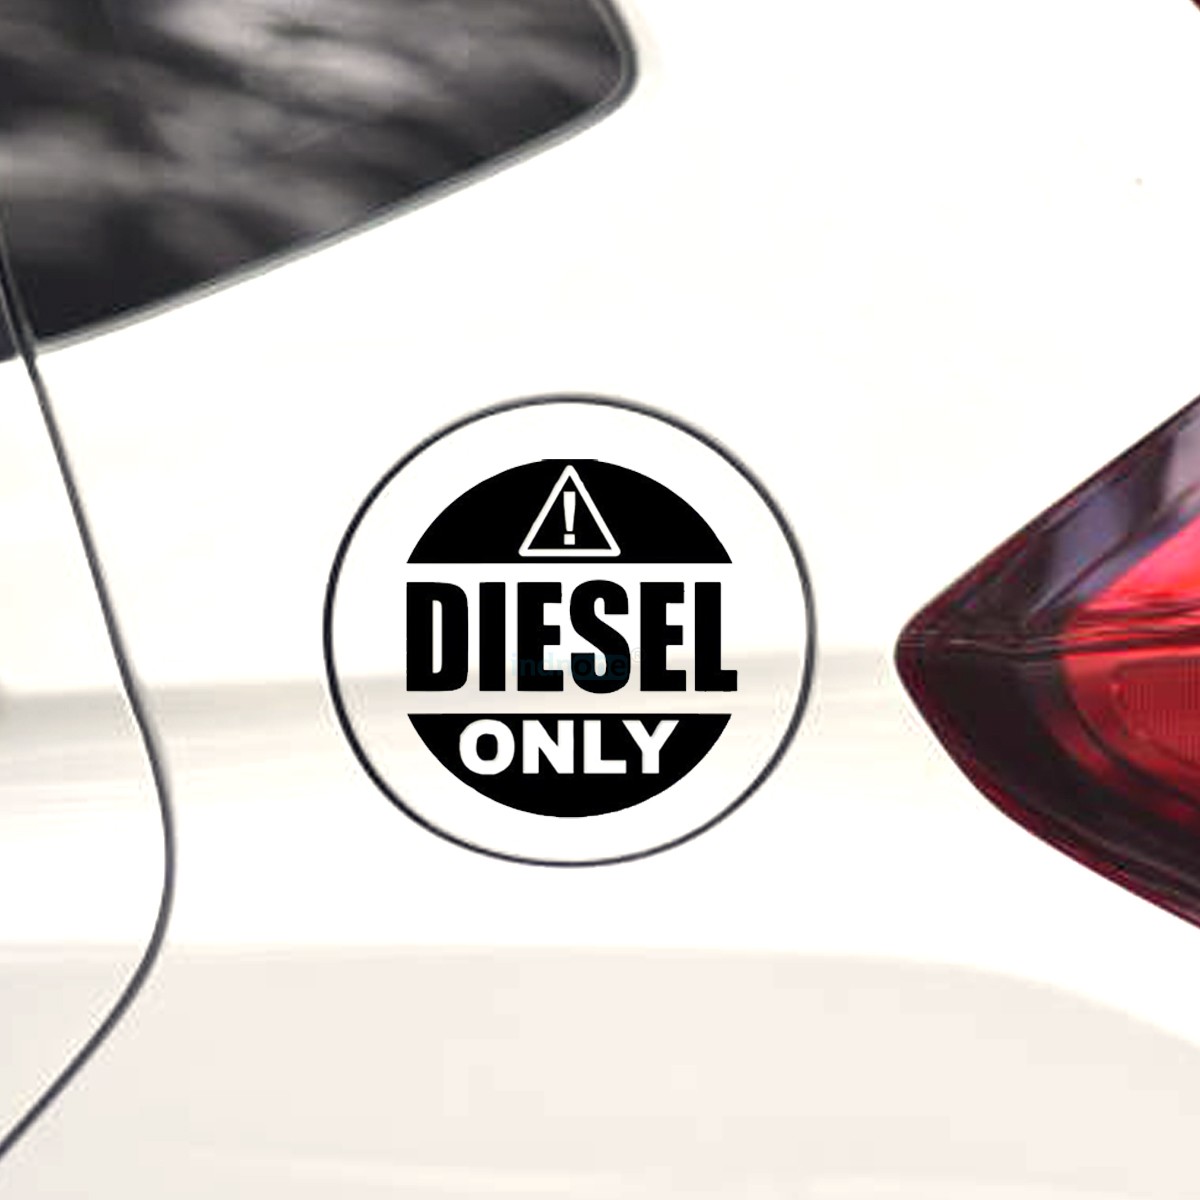 indnone® Diesel Only Logo Sticker for Car. Car Sticker Stylish Fuel Lid | Black Color Standard Size